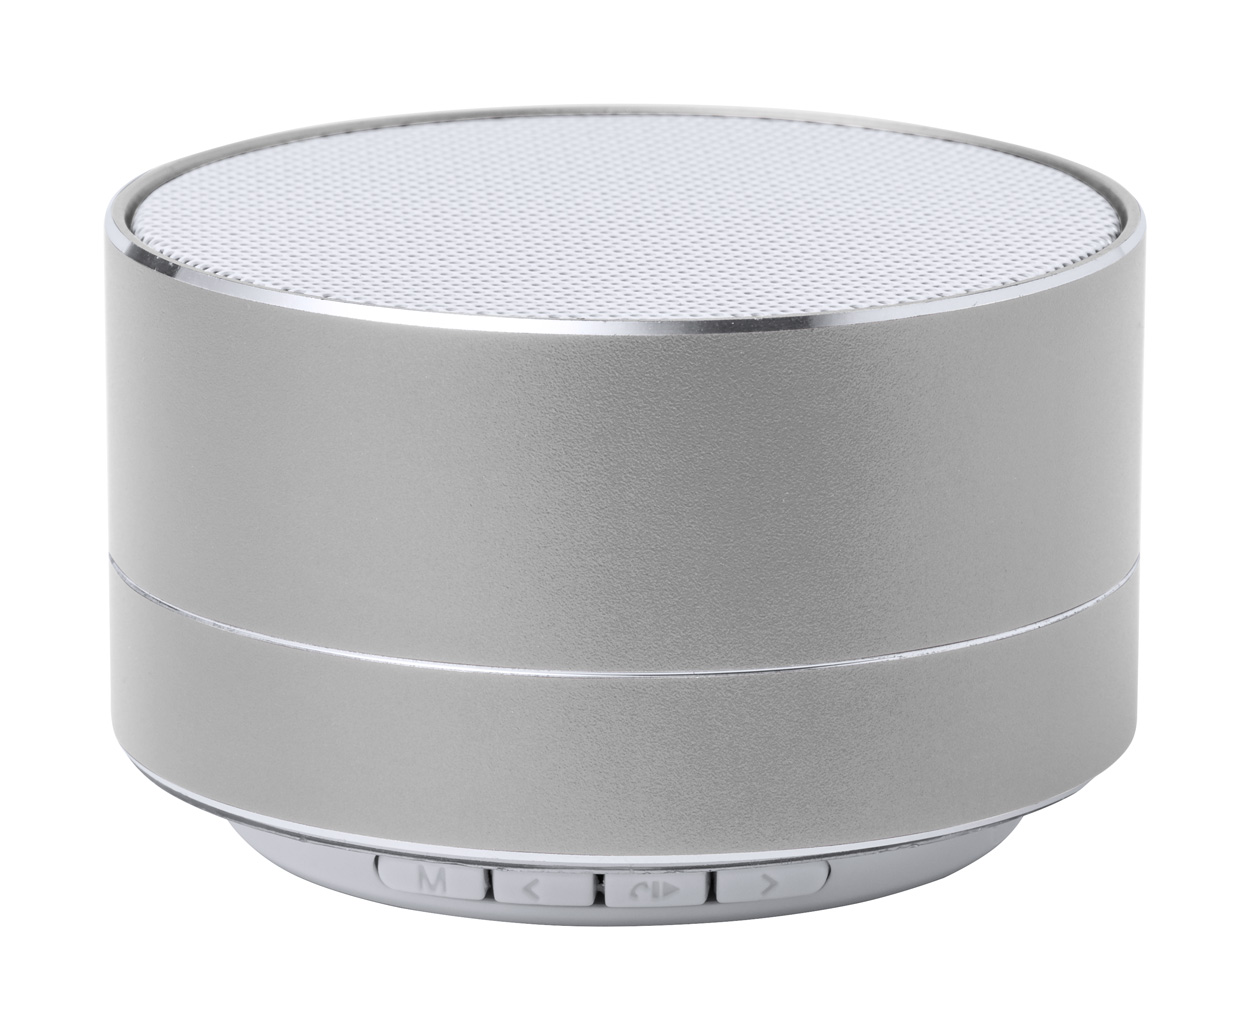 Skind bluetooth speaker - silver